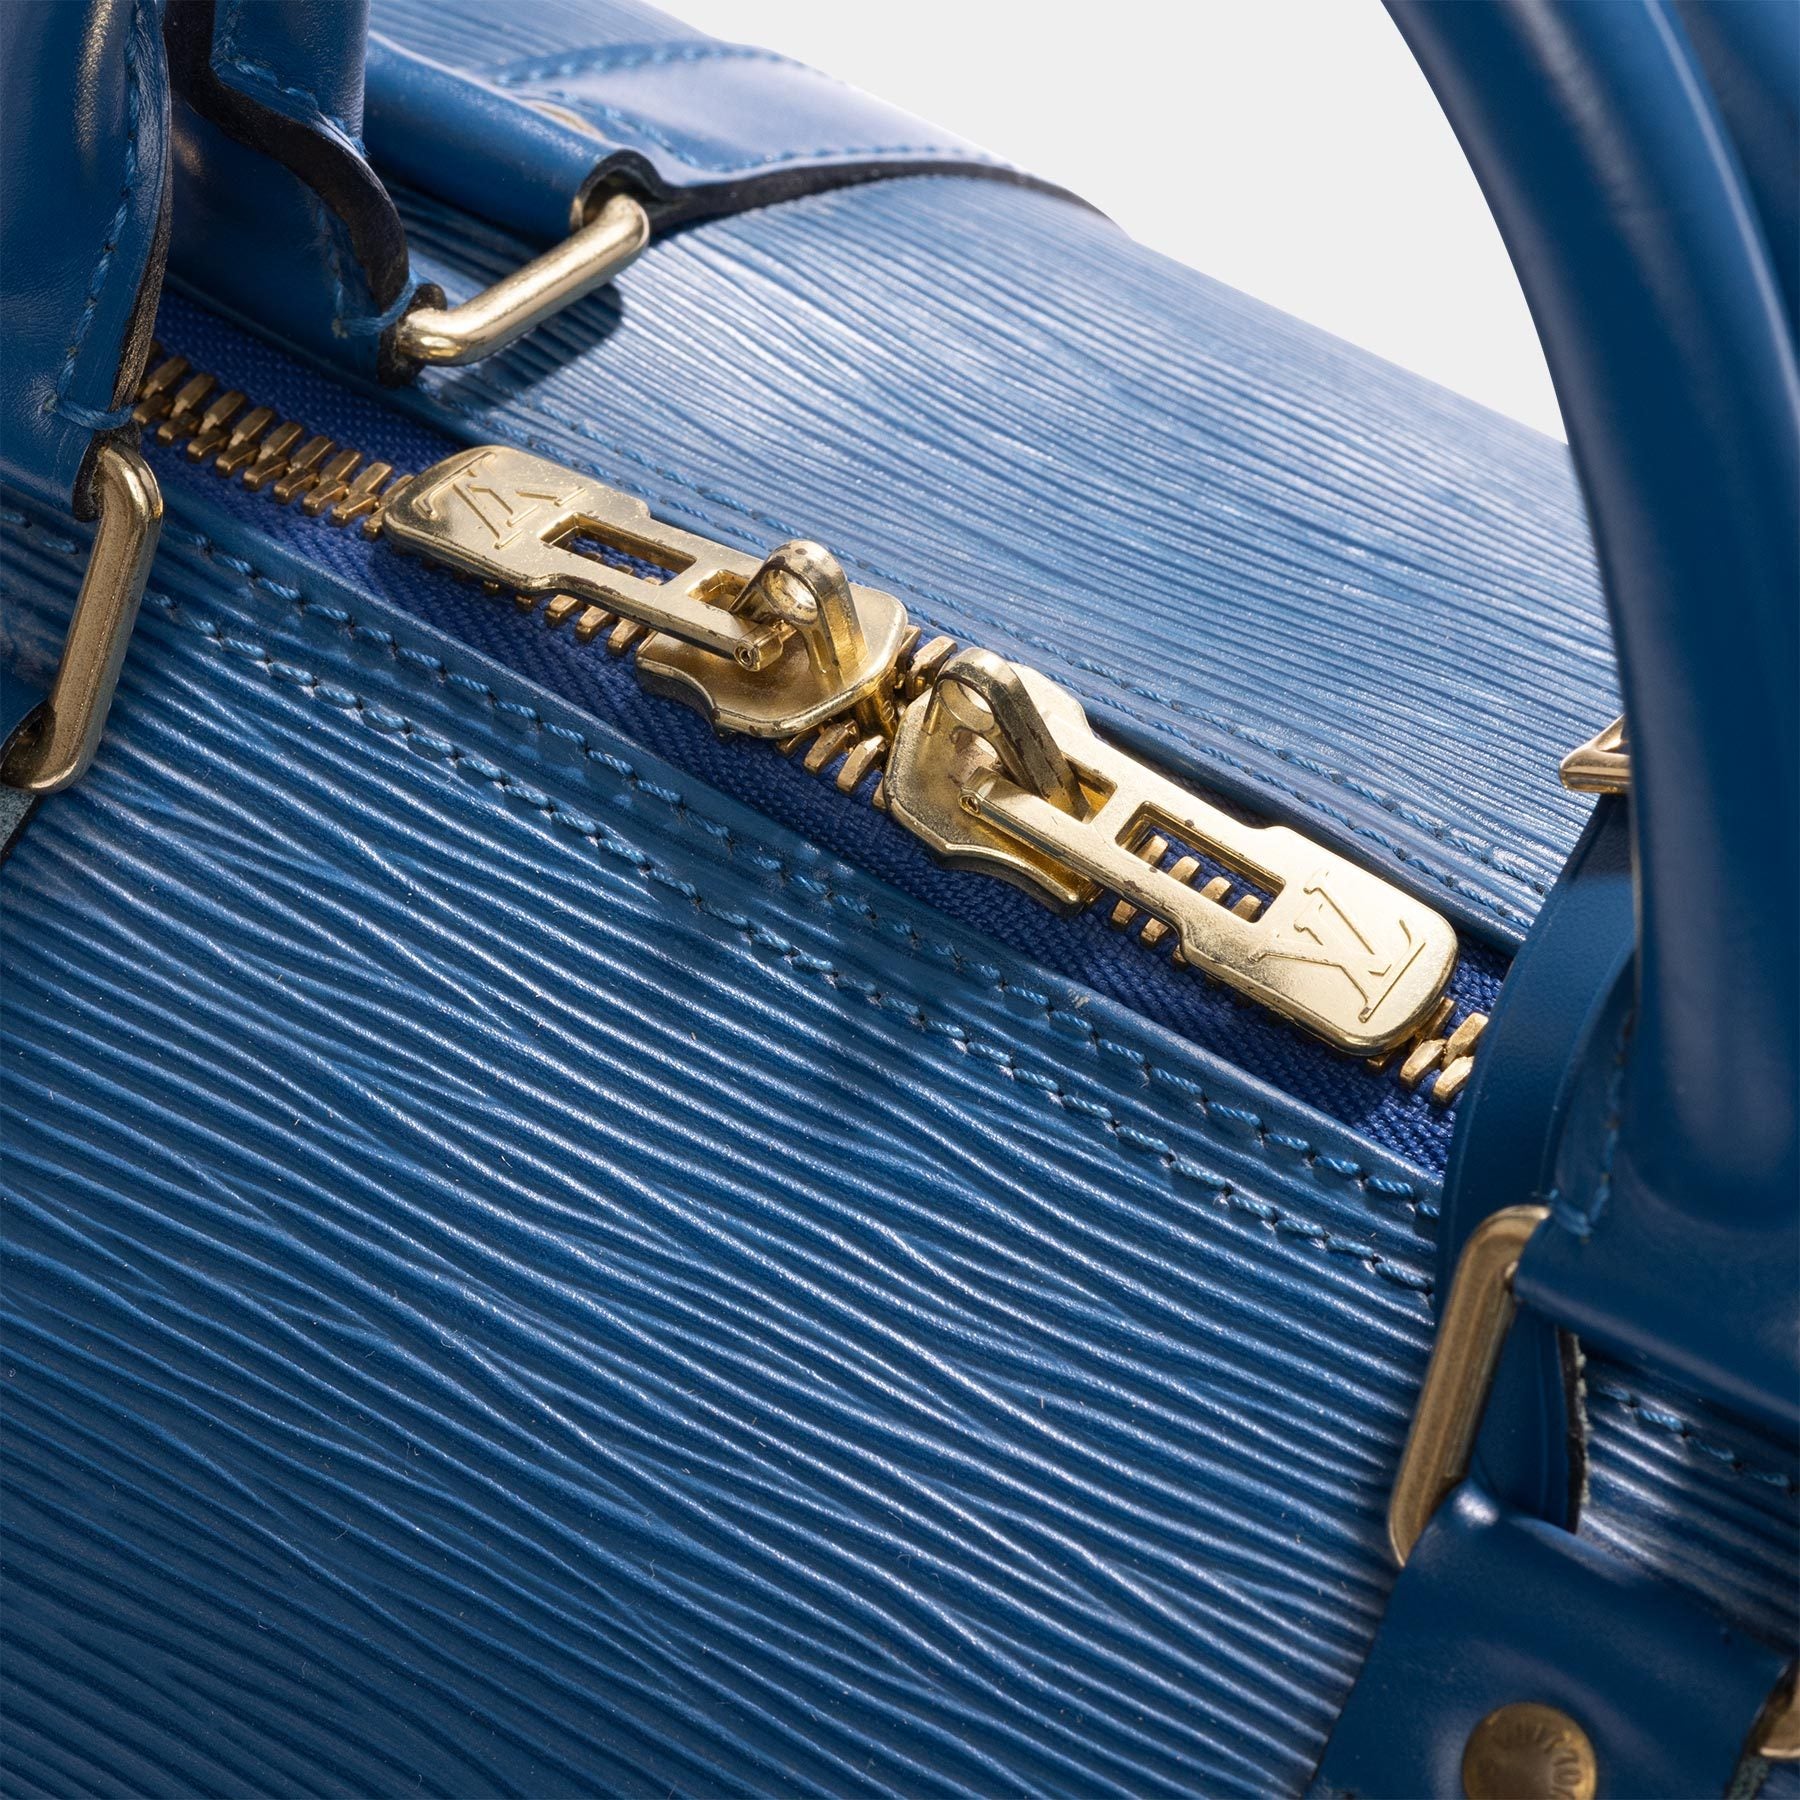 Louis Vuitton, Bags, Louis Vuitton Blue Epi Leather Keepall 5 Boston Travel  Duffel Bag Vi0965 Lv50